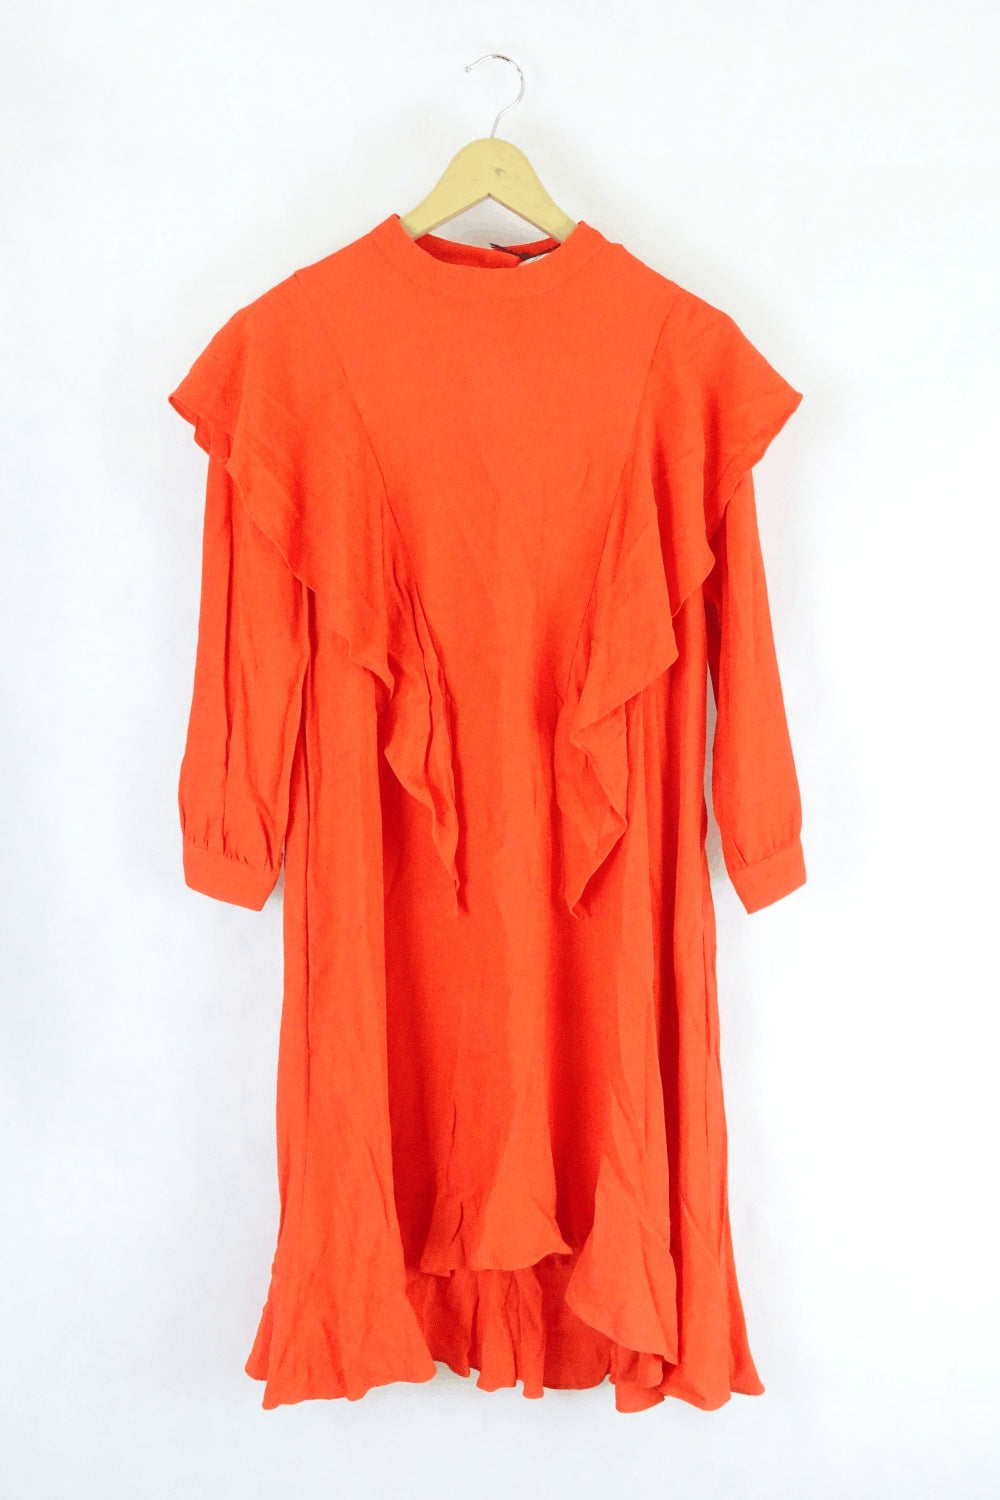 & Other Stories Orange Dress 10